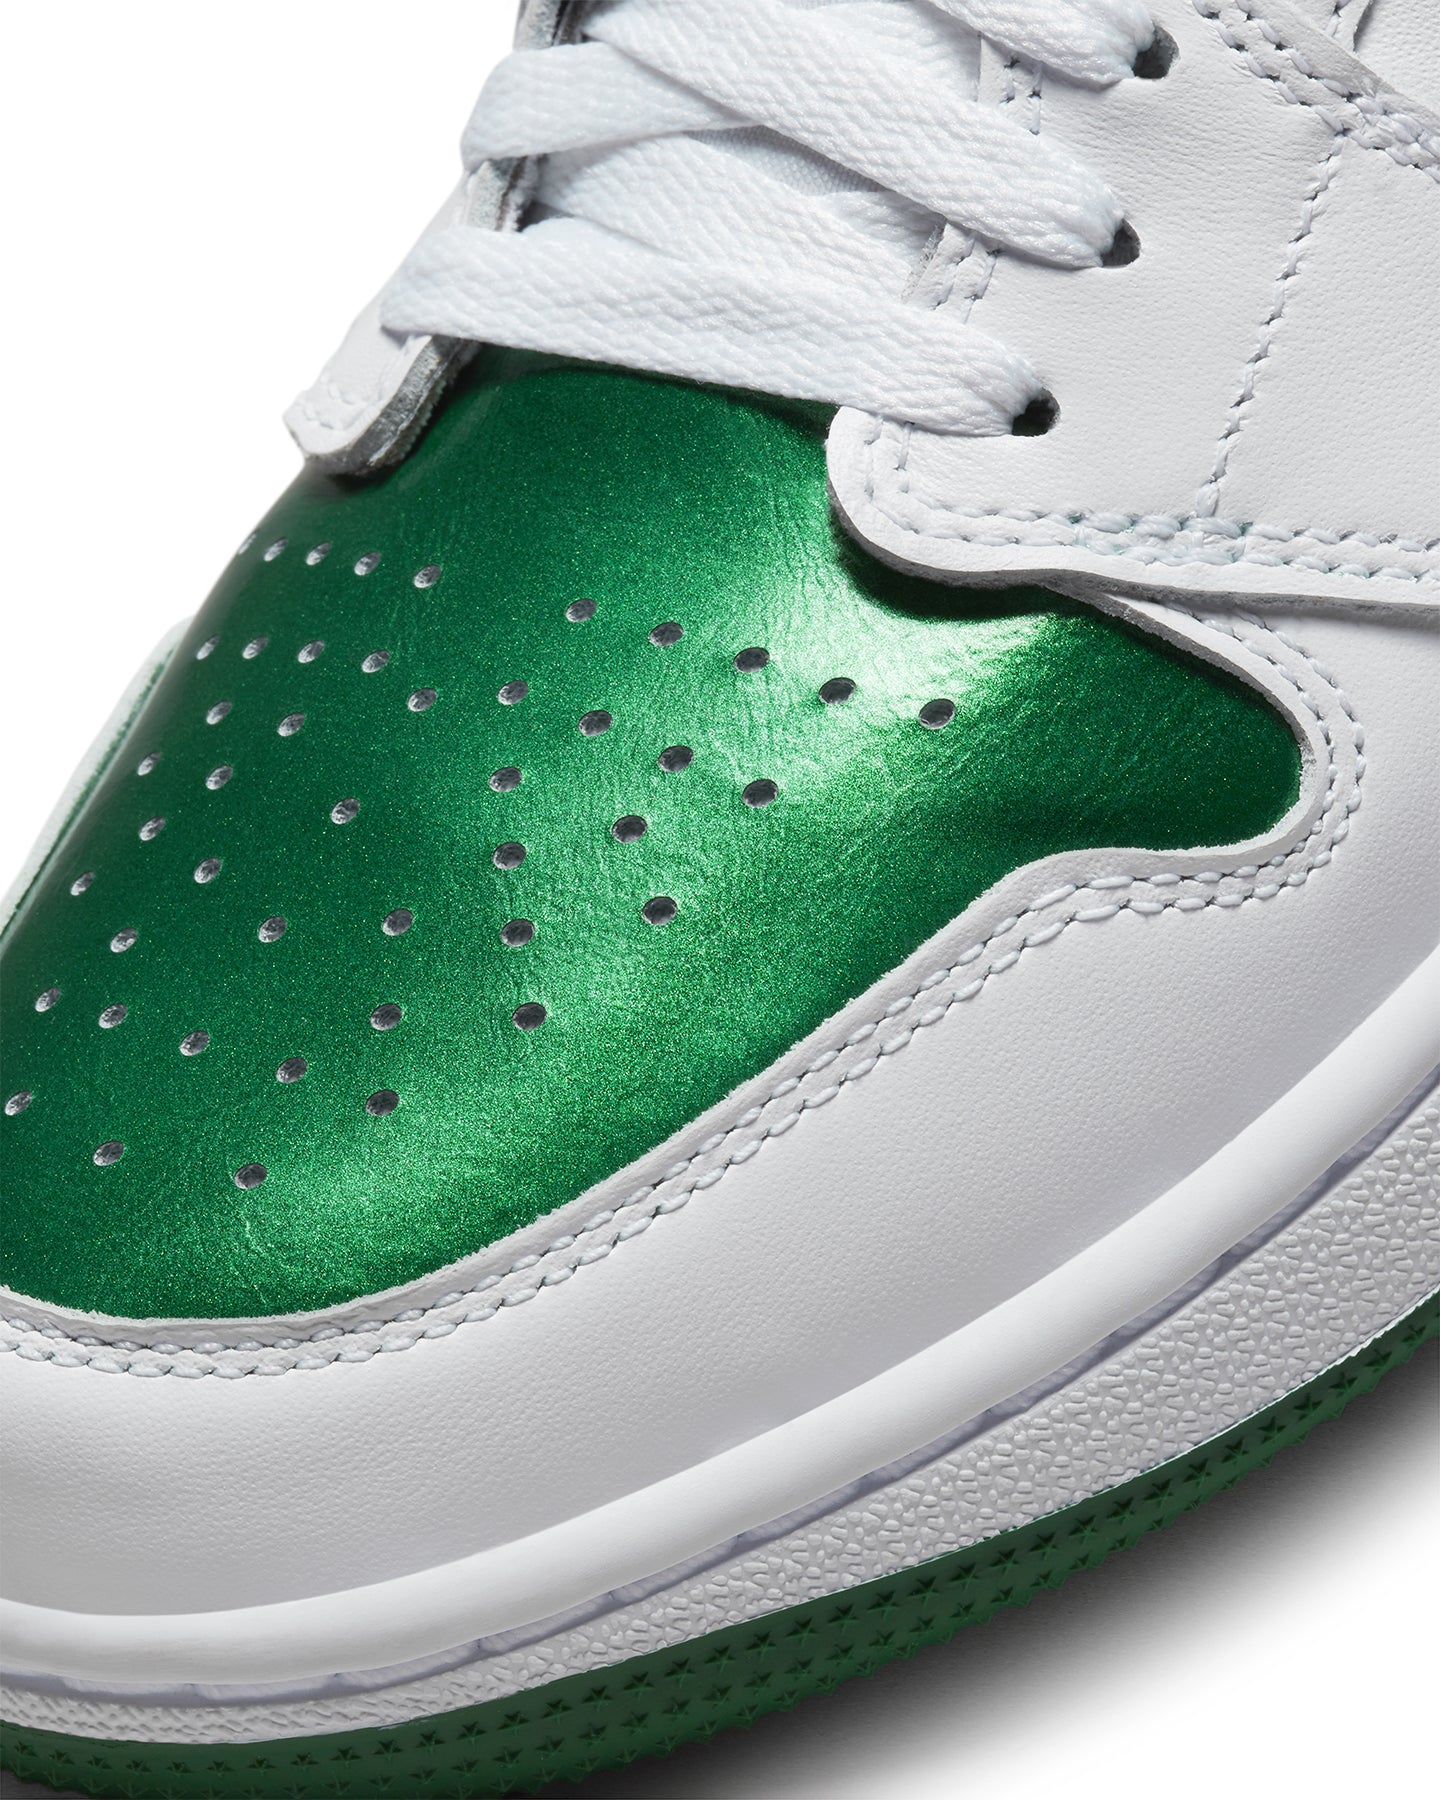 Jordan 1 Green Shoes.